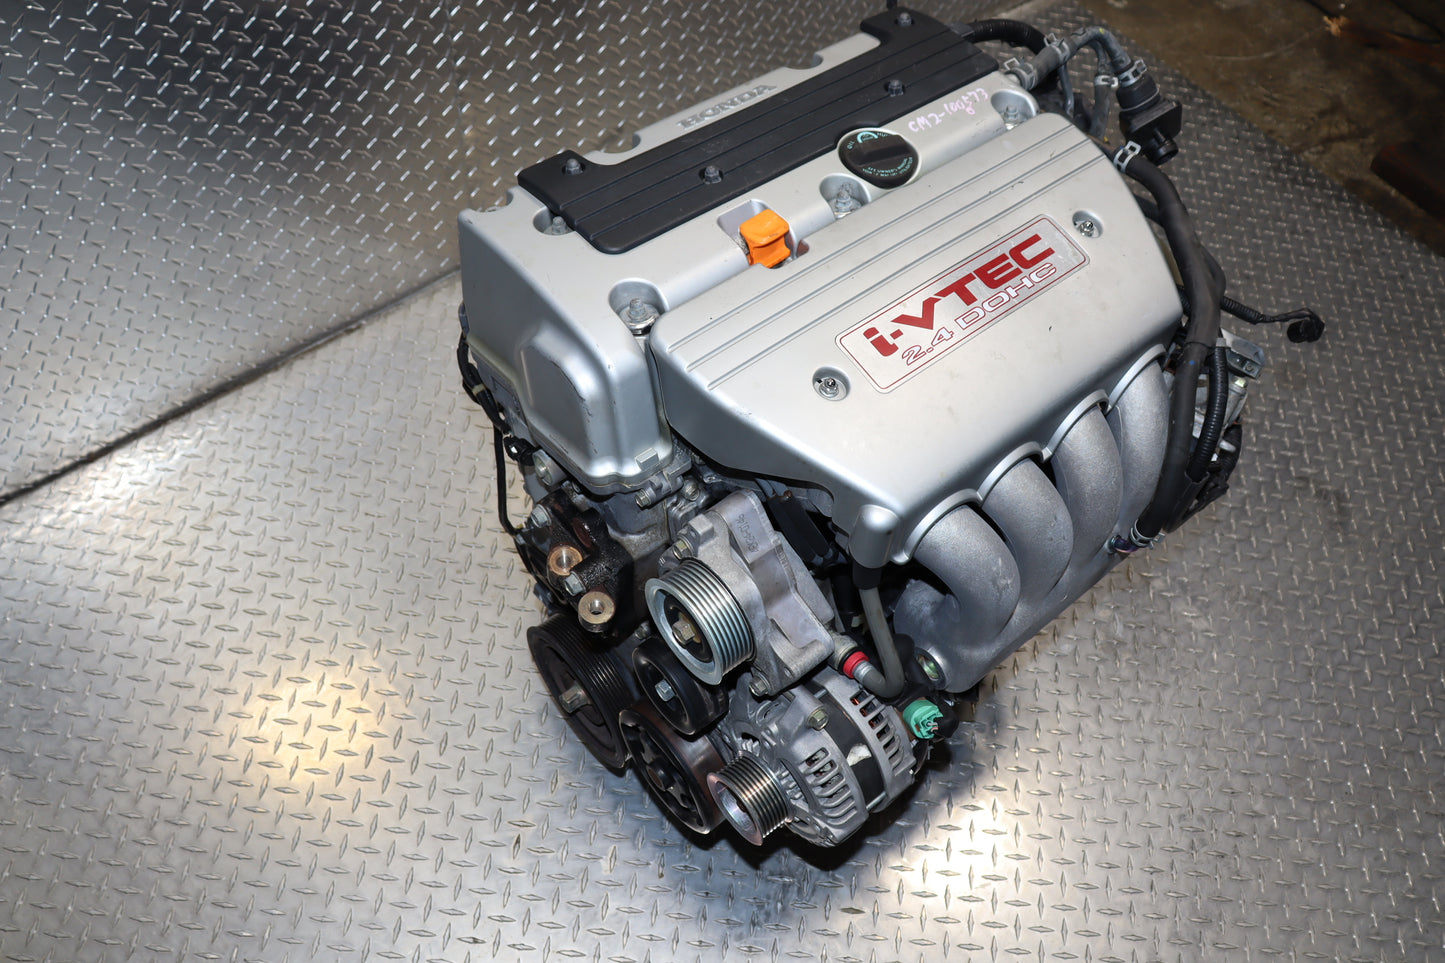 JDM K24A TYPE-S 2.4L ACURA TSX 04 05 06 I-VTEC DOHC ENGINE 3-LOB MOTOR RBB HEAD